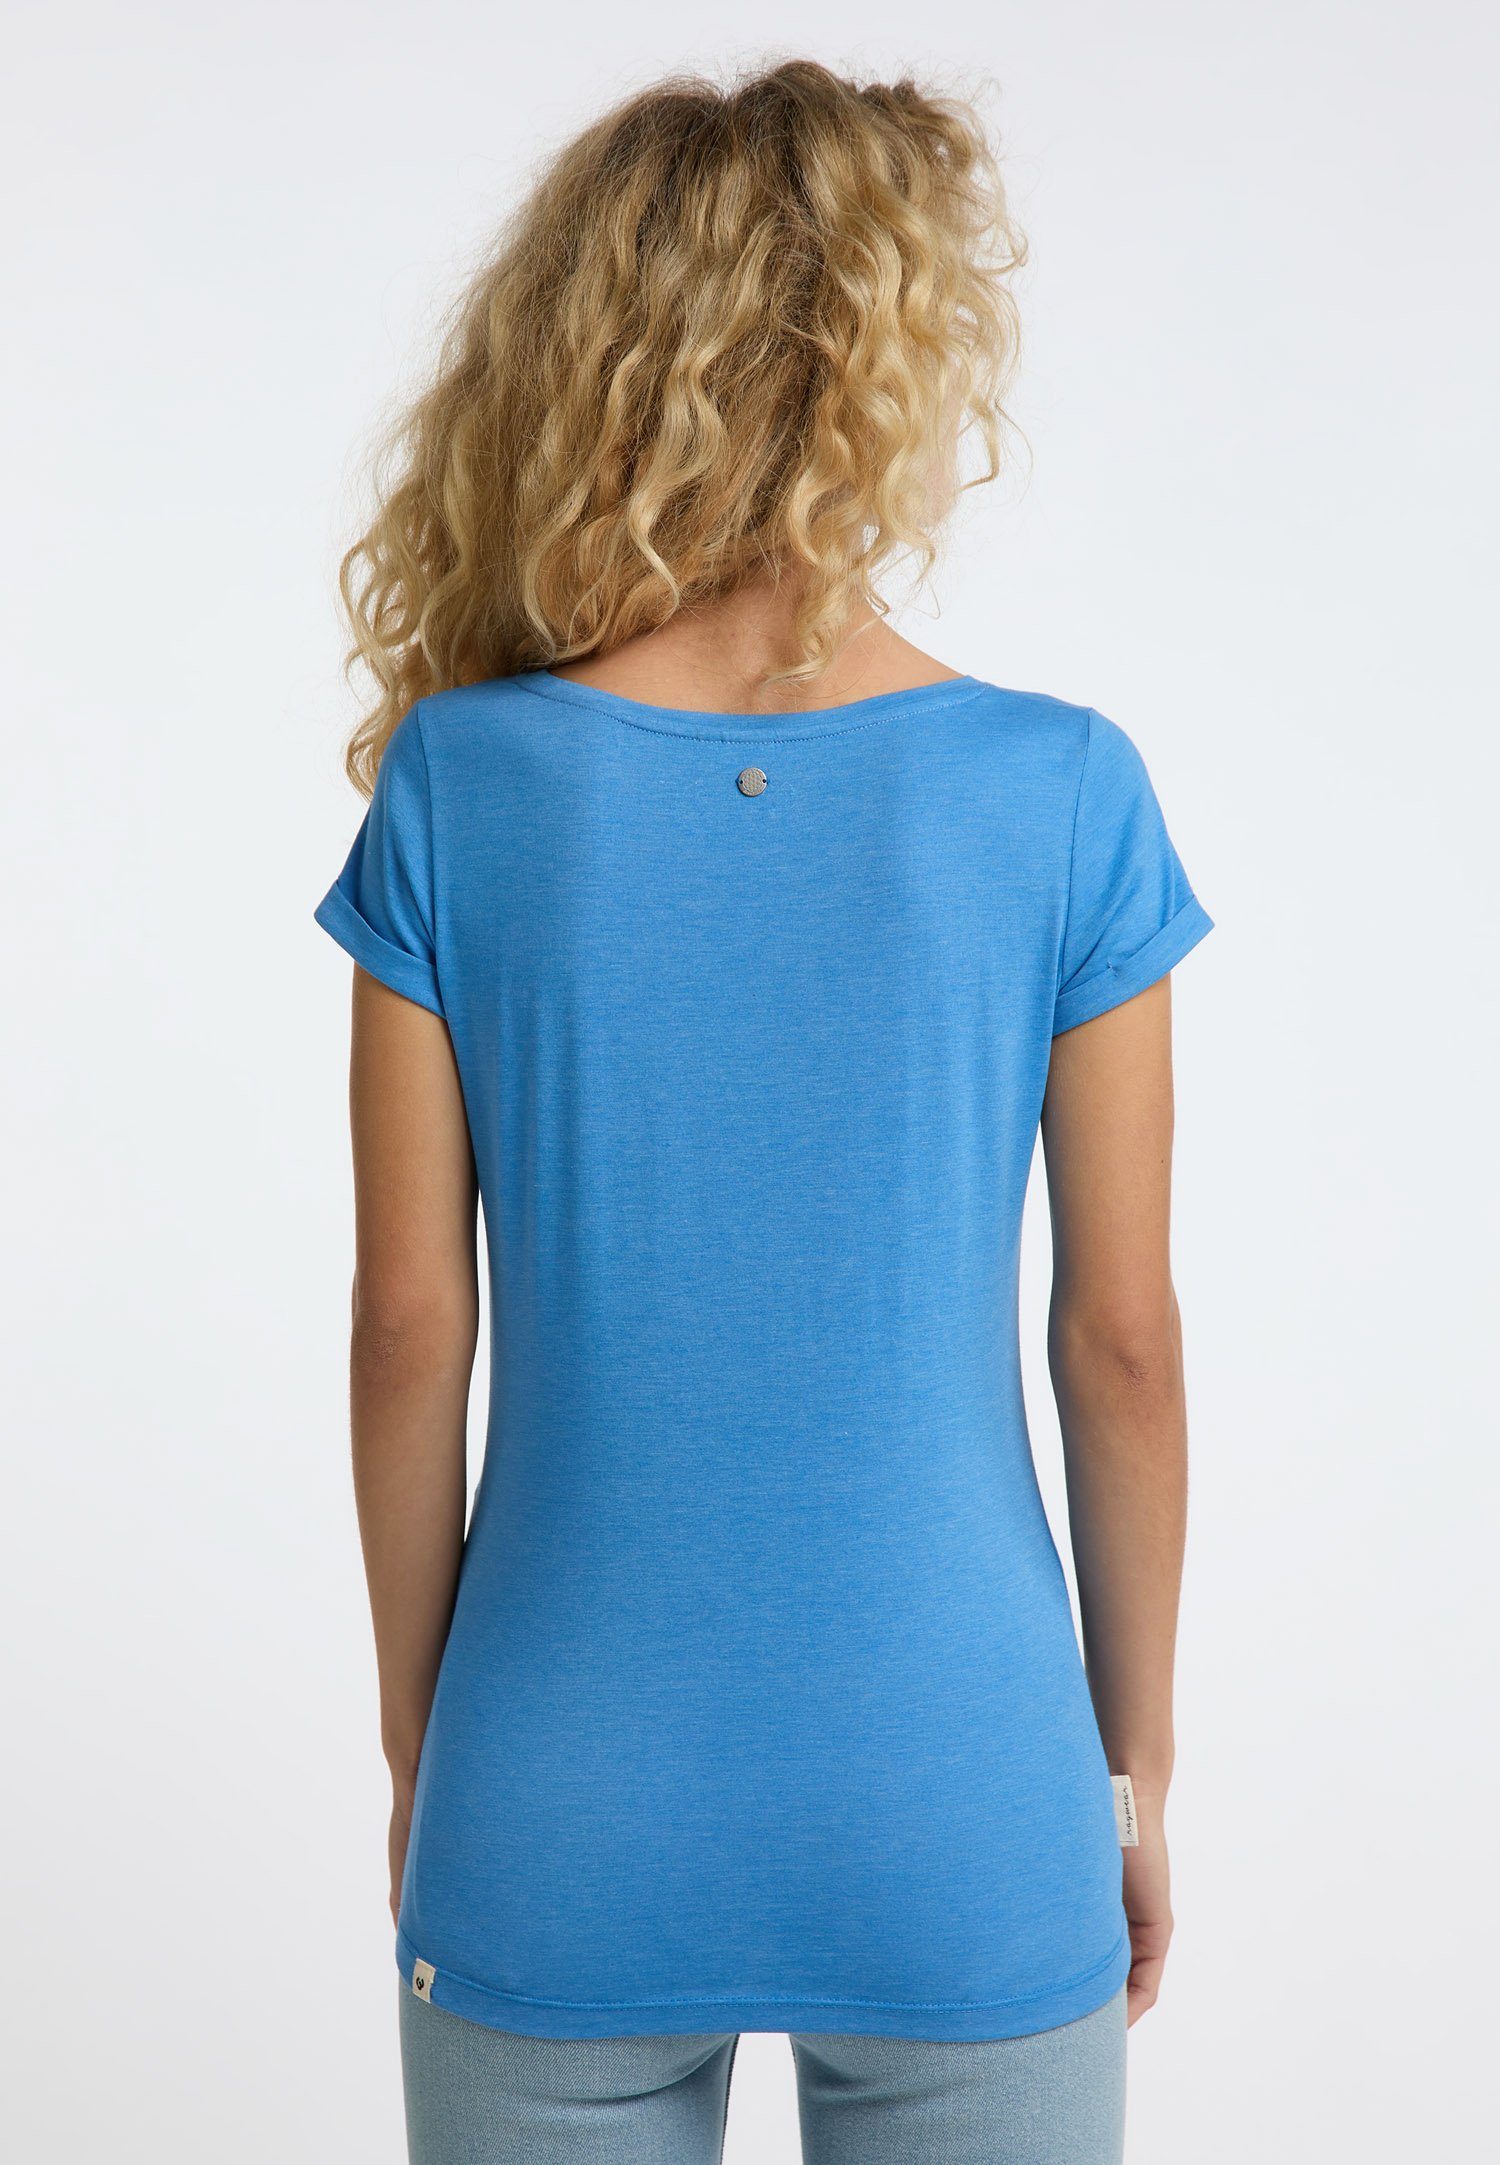 Mode FLORAH Vegane & BLUE A T-Shirt Nachhaltige Ragwear ORGANIC